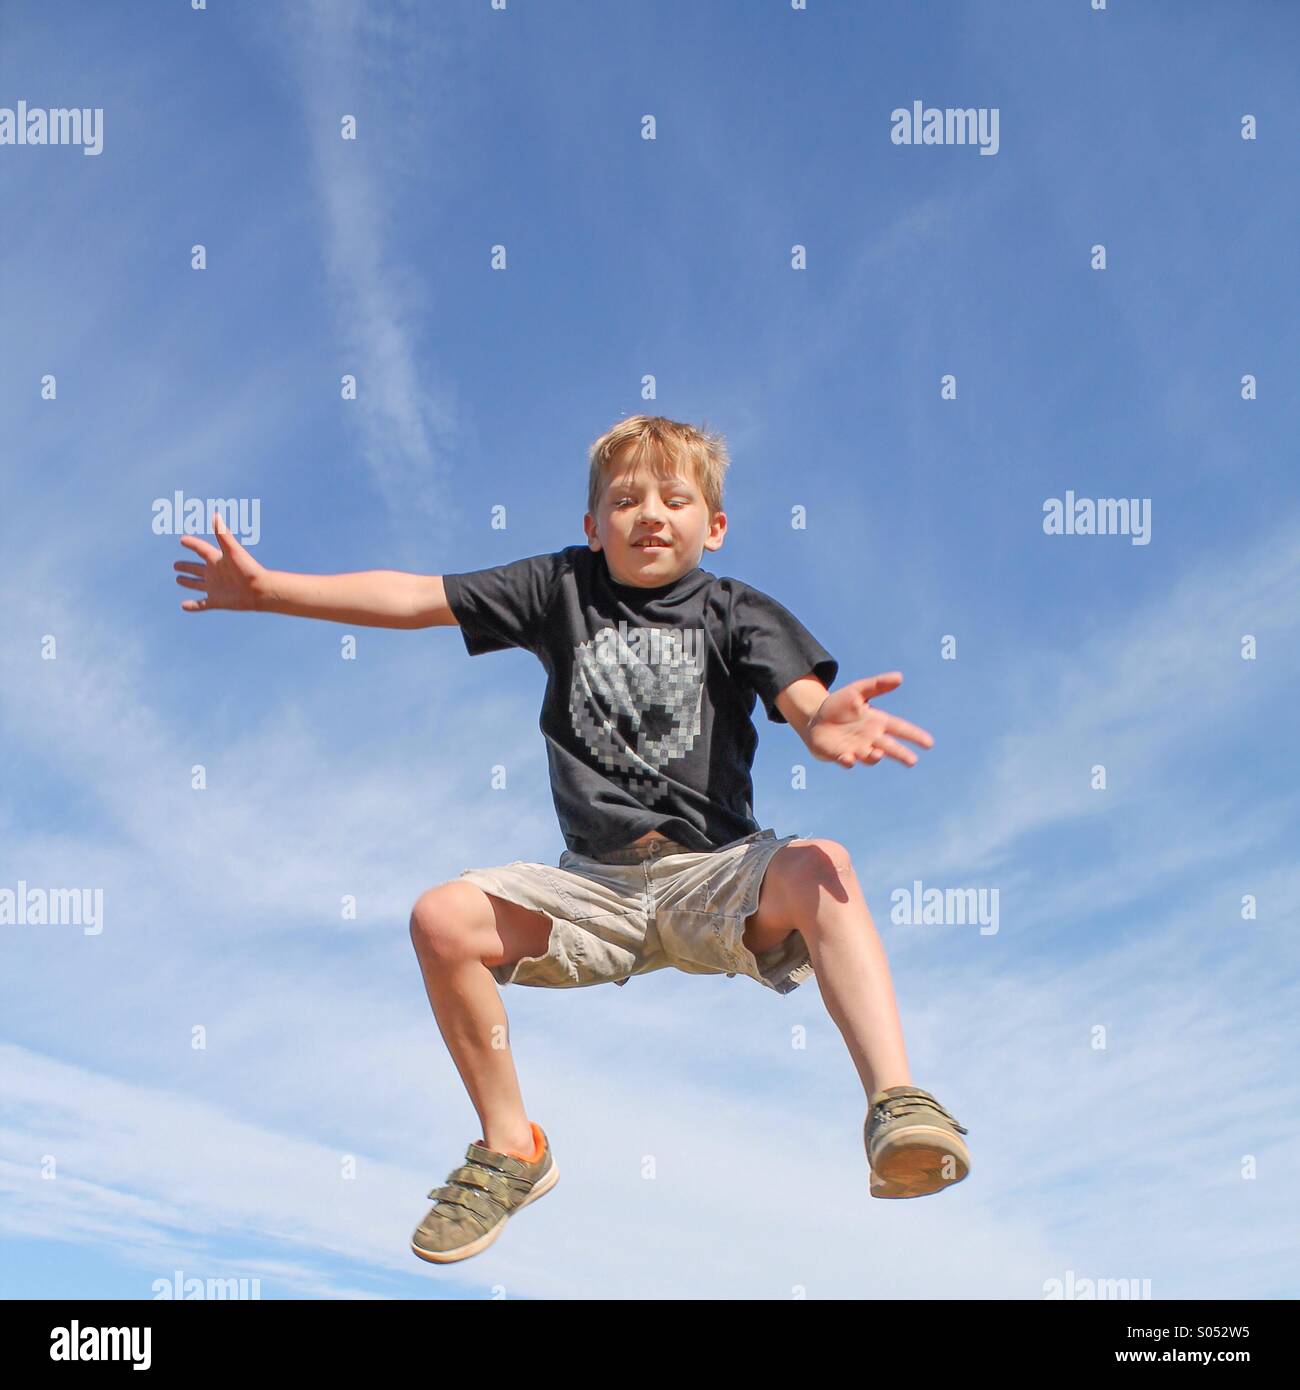 Bounce with joy Stock Photo